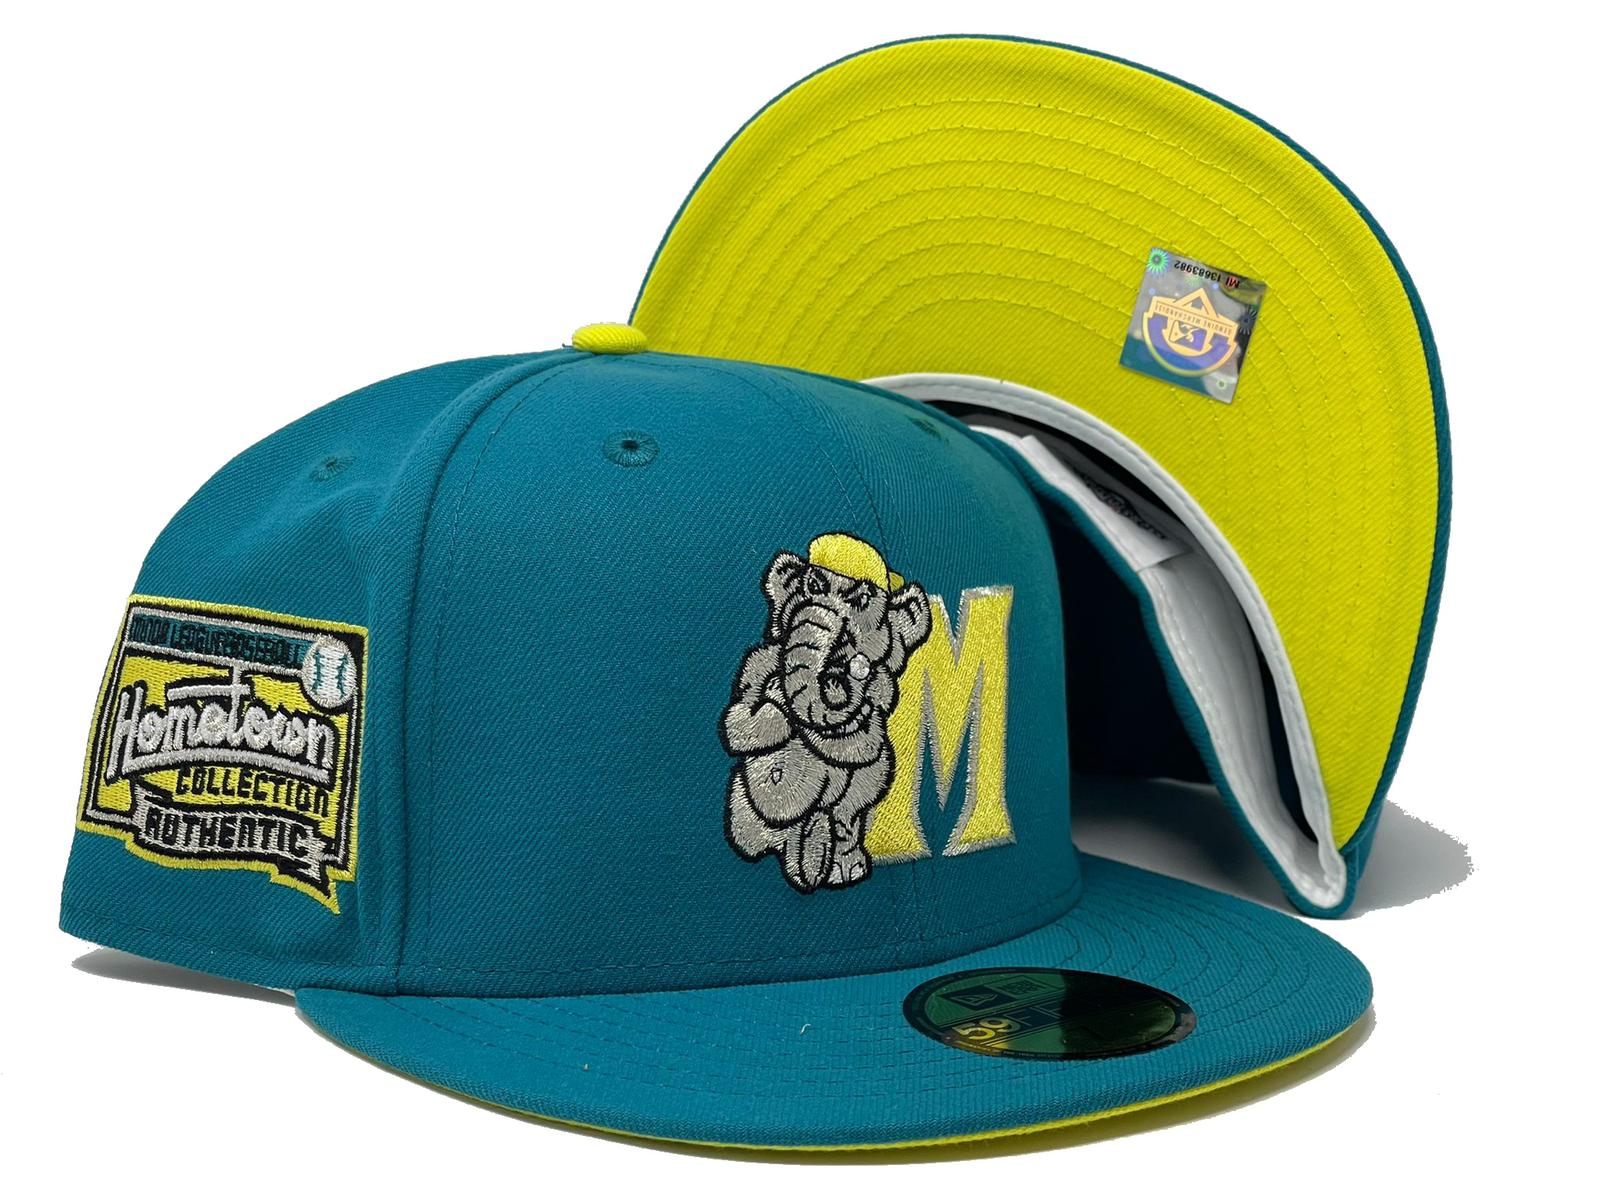 Oakland Athletics Mitchell & Ness Hometown Snapback Hat - Gold/Green